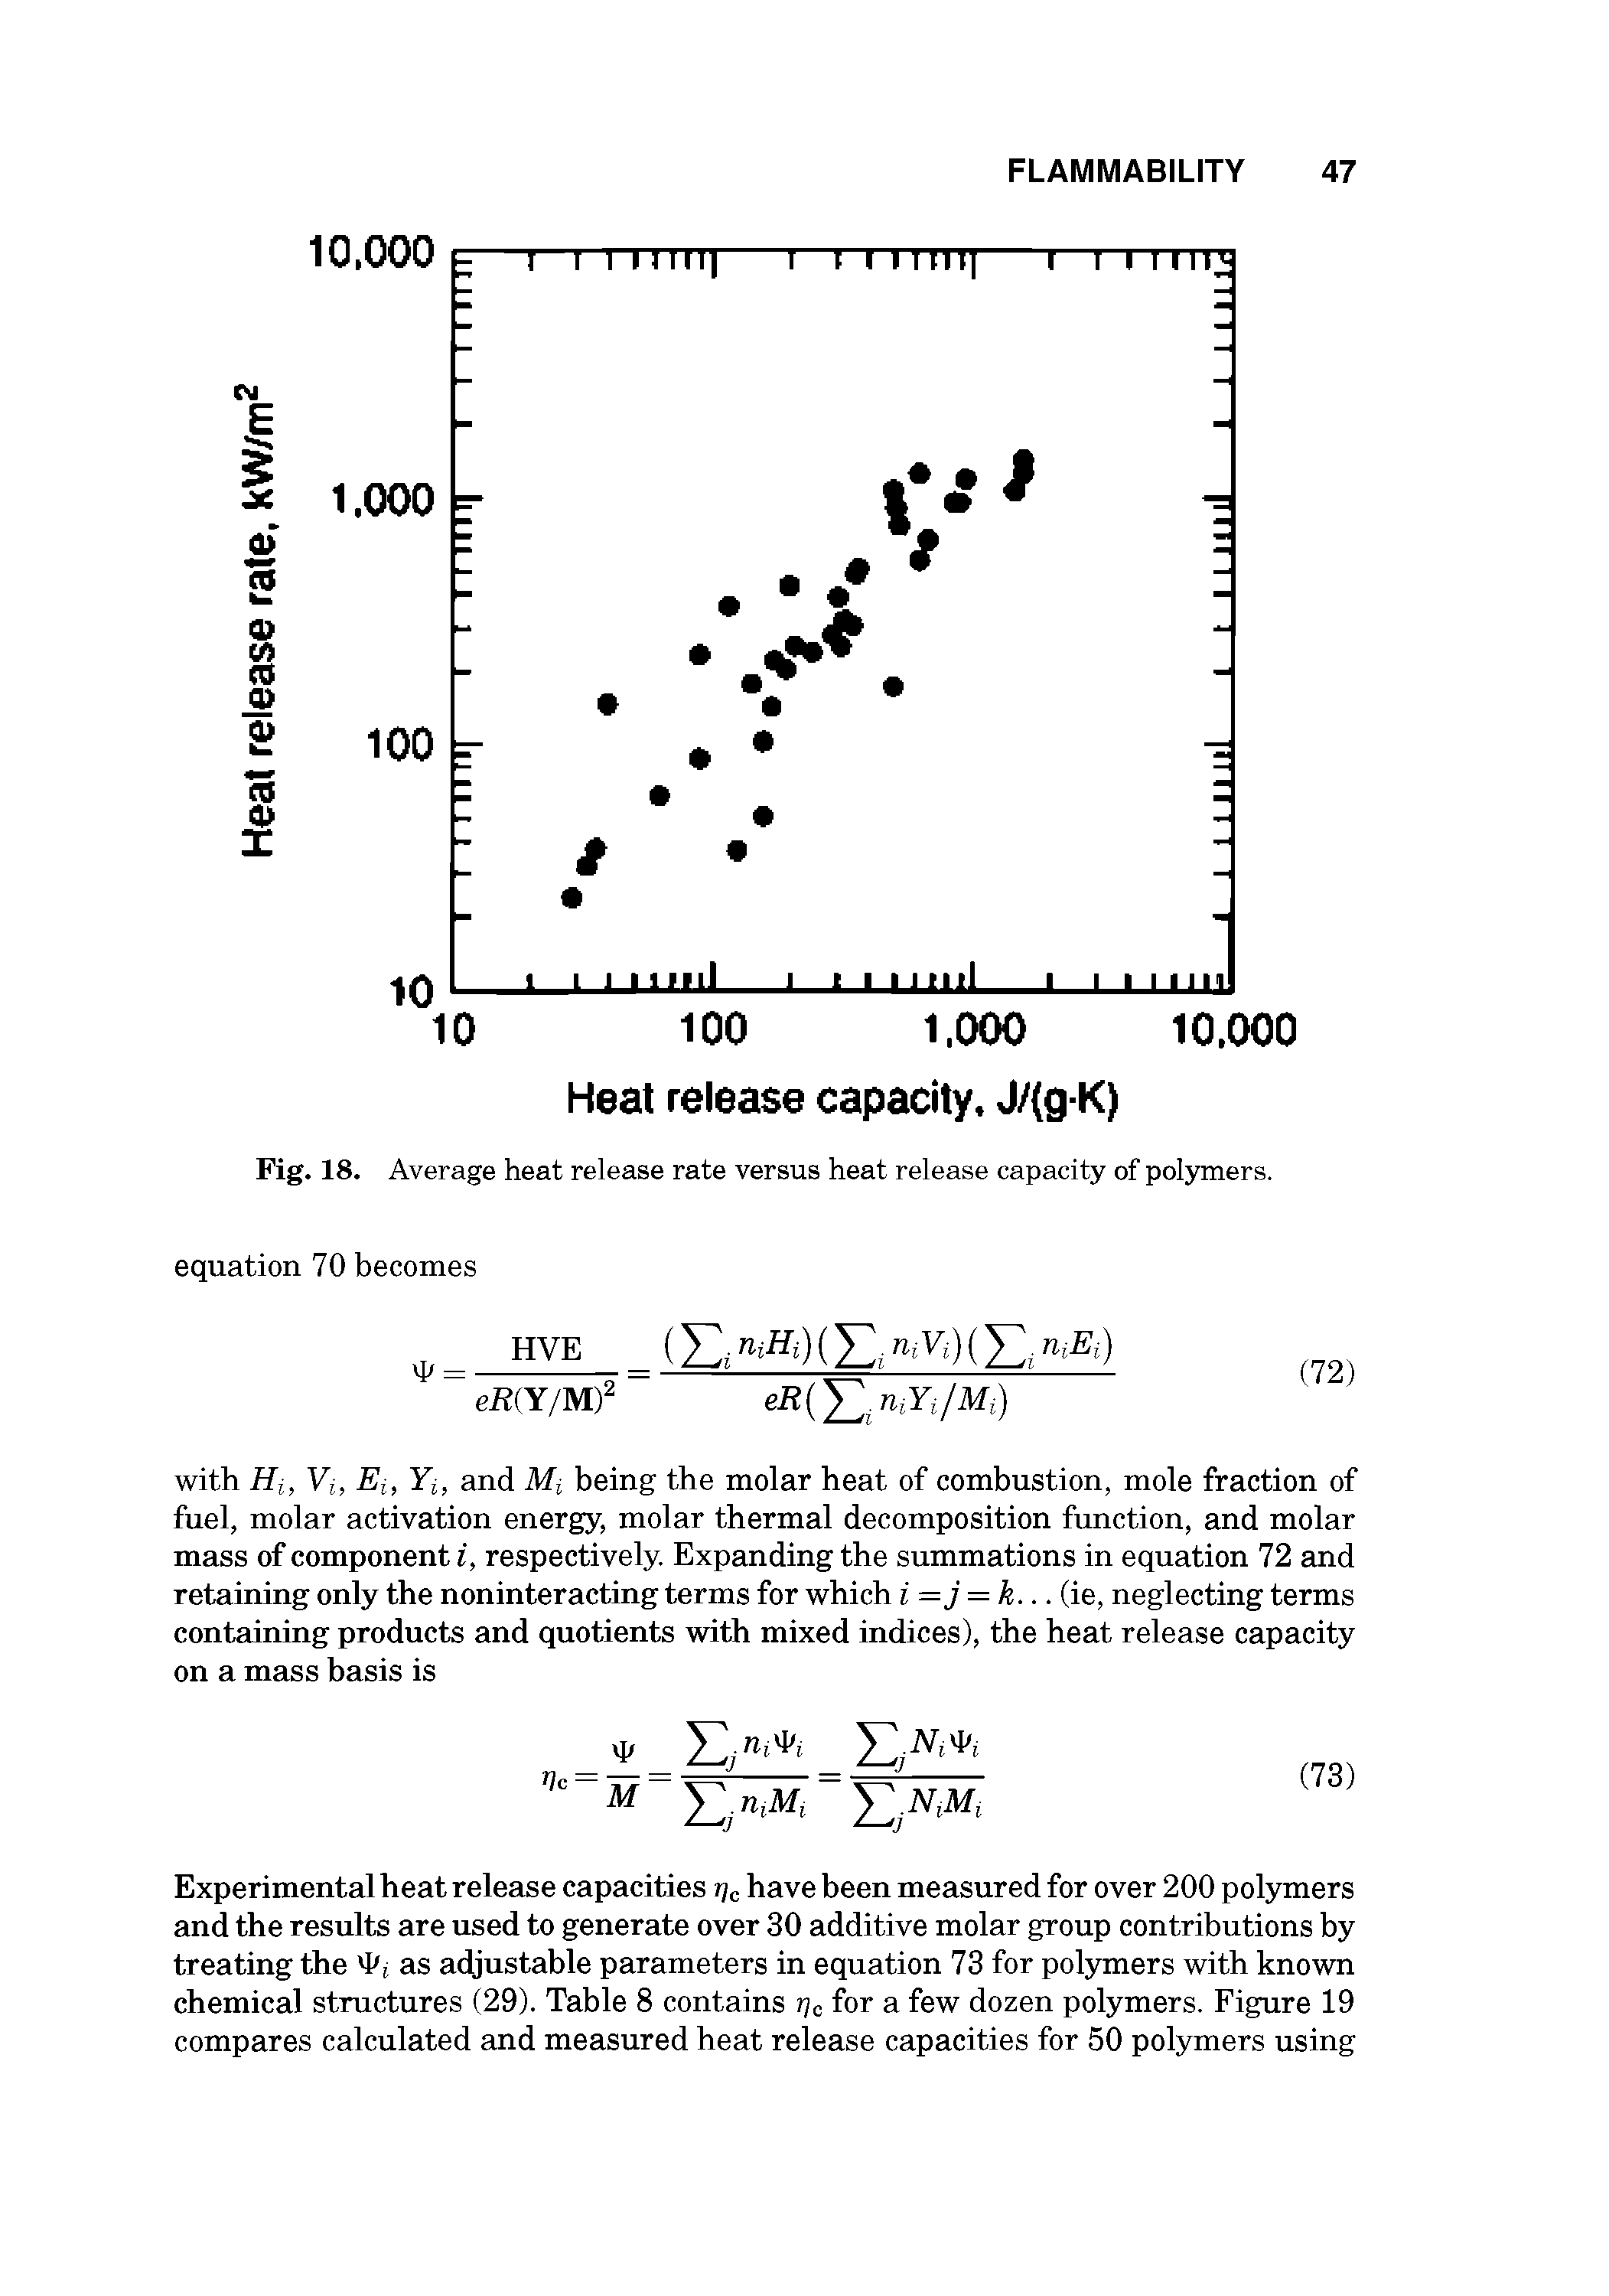 Fig. 18. Average heat release rate versus heat release capacity of polymers.